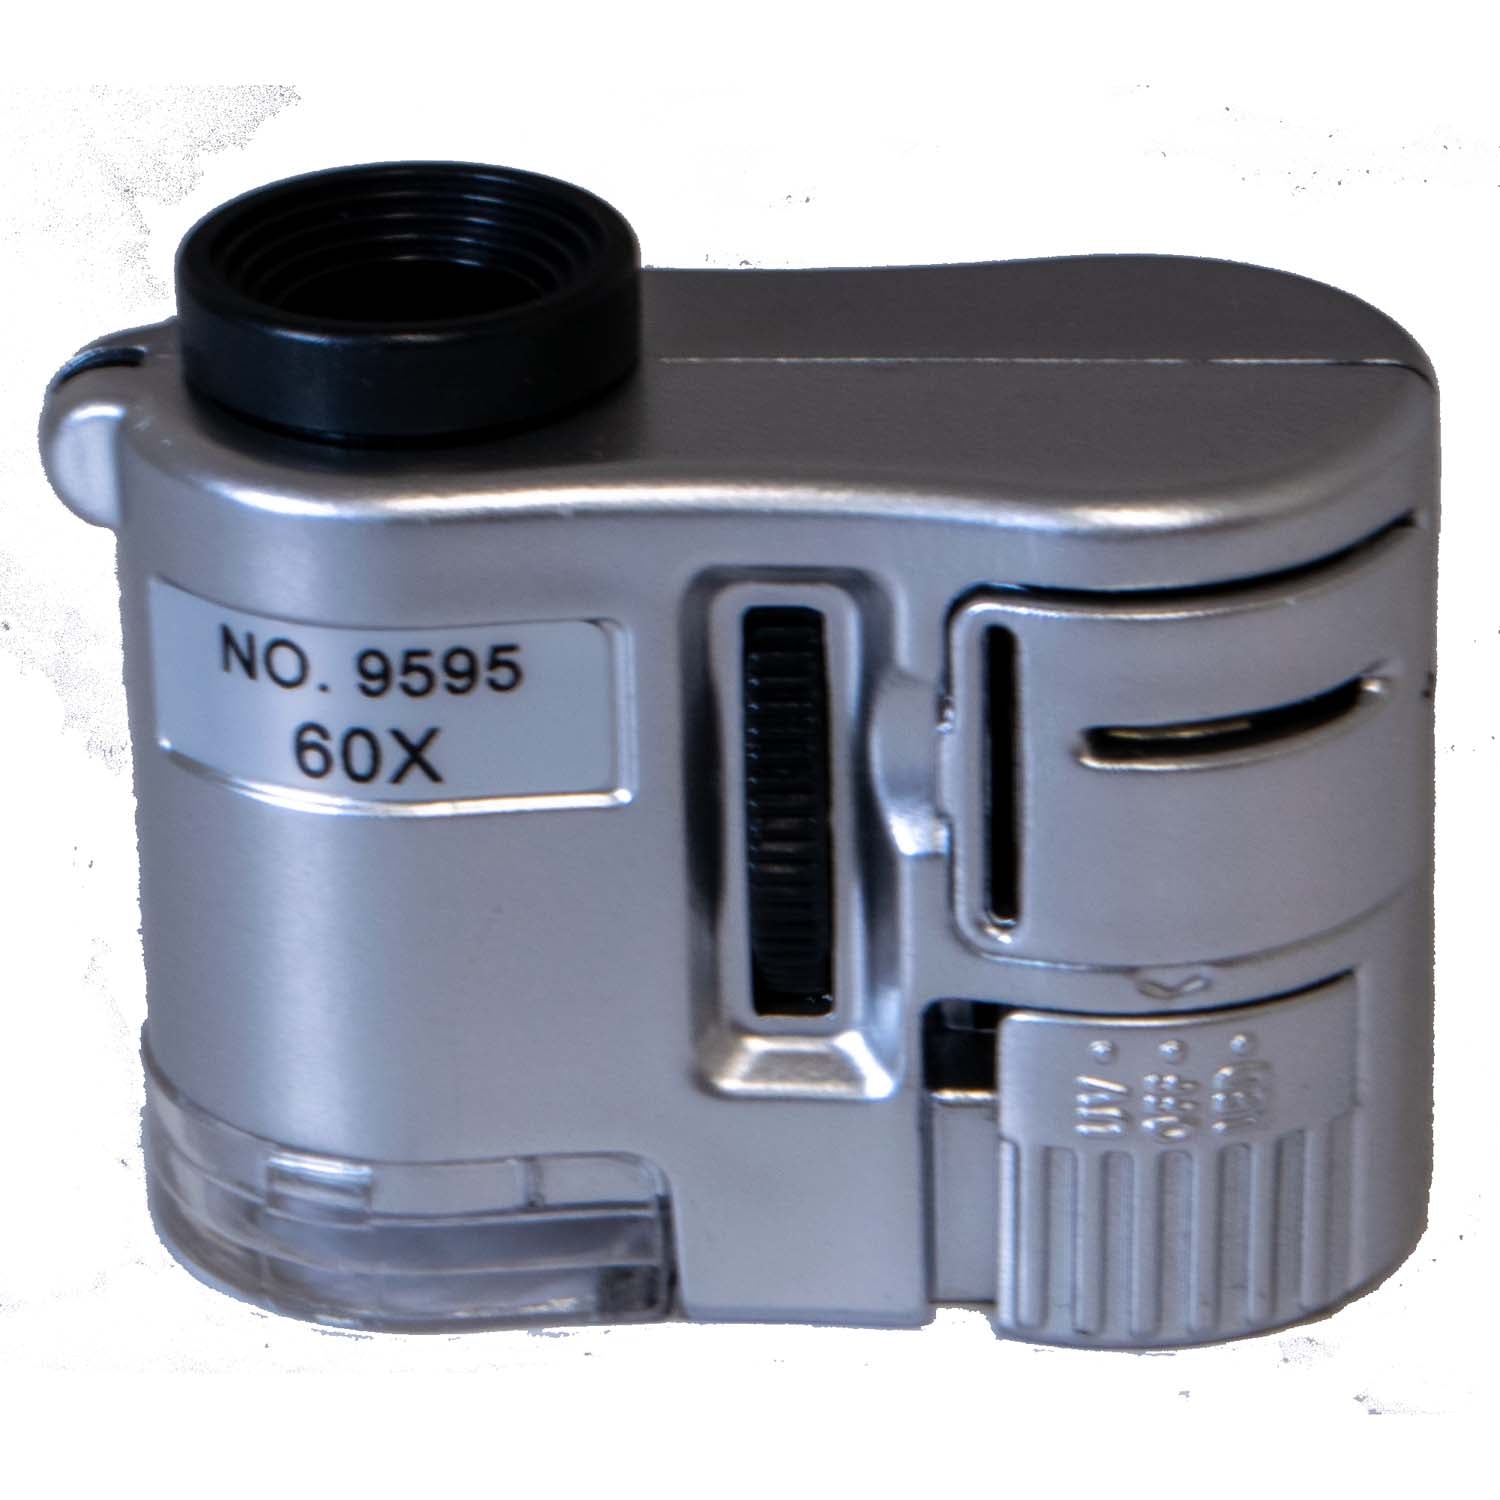 Pocket Microscope with light, 60X + UV light + free iPhone adaptor for iP4